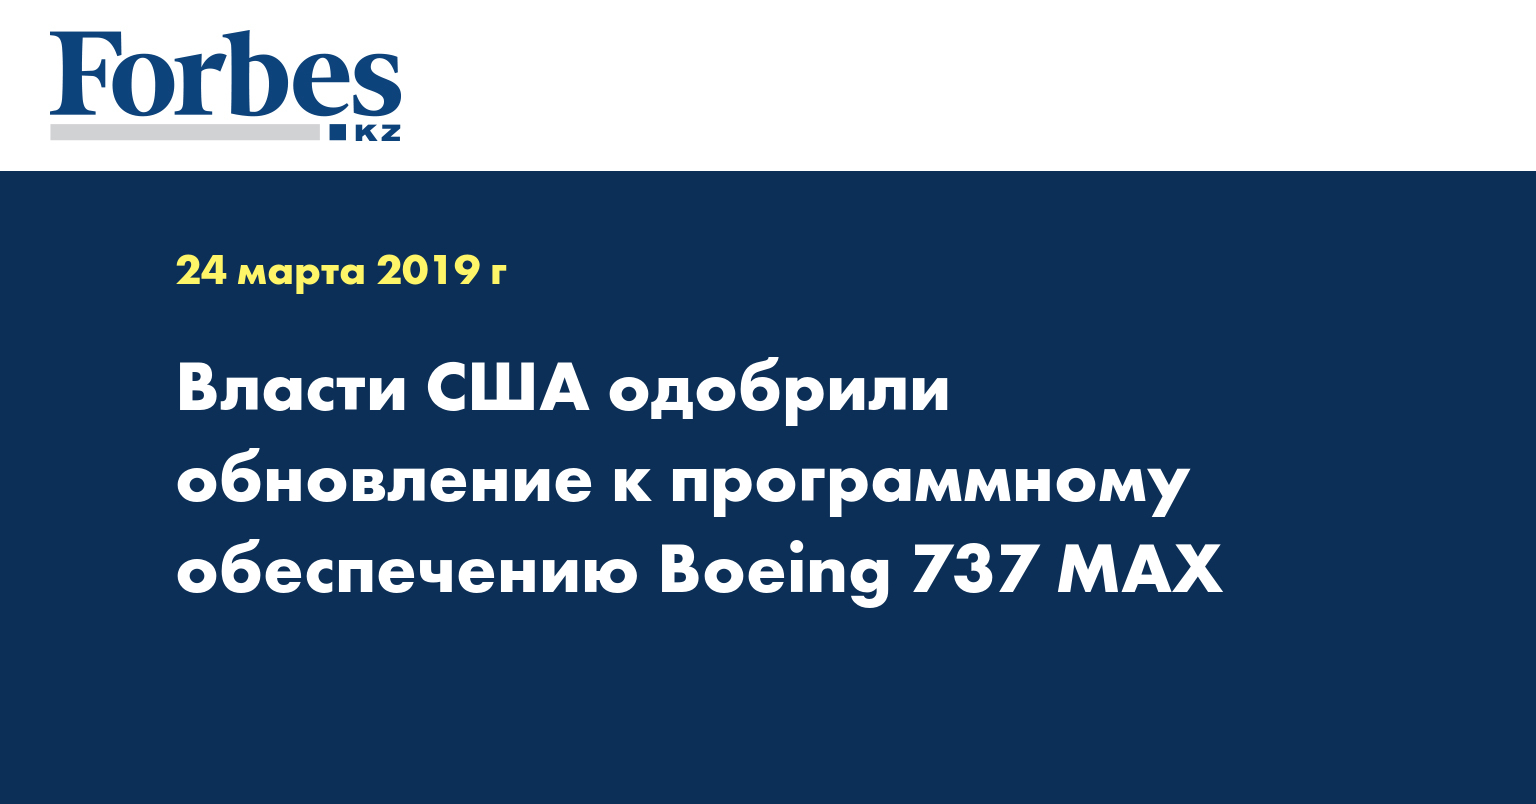 Власти США одобрили обновление к программному обеспечению Boeing 737 MAX